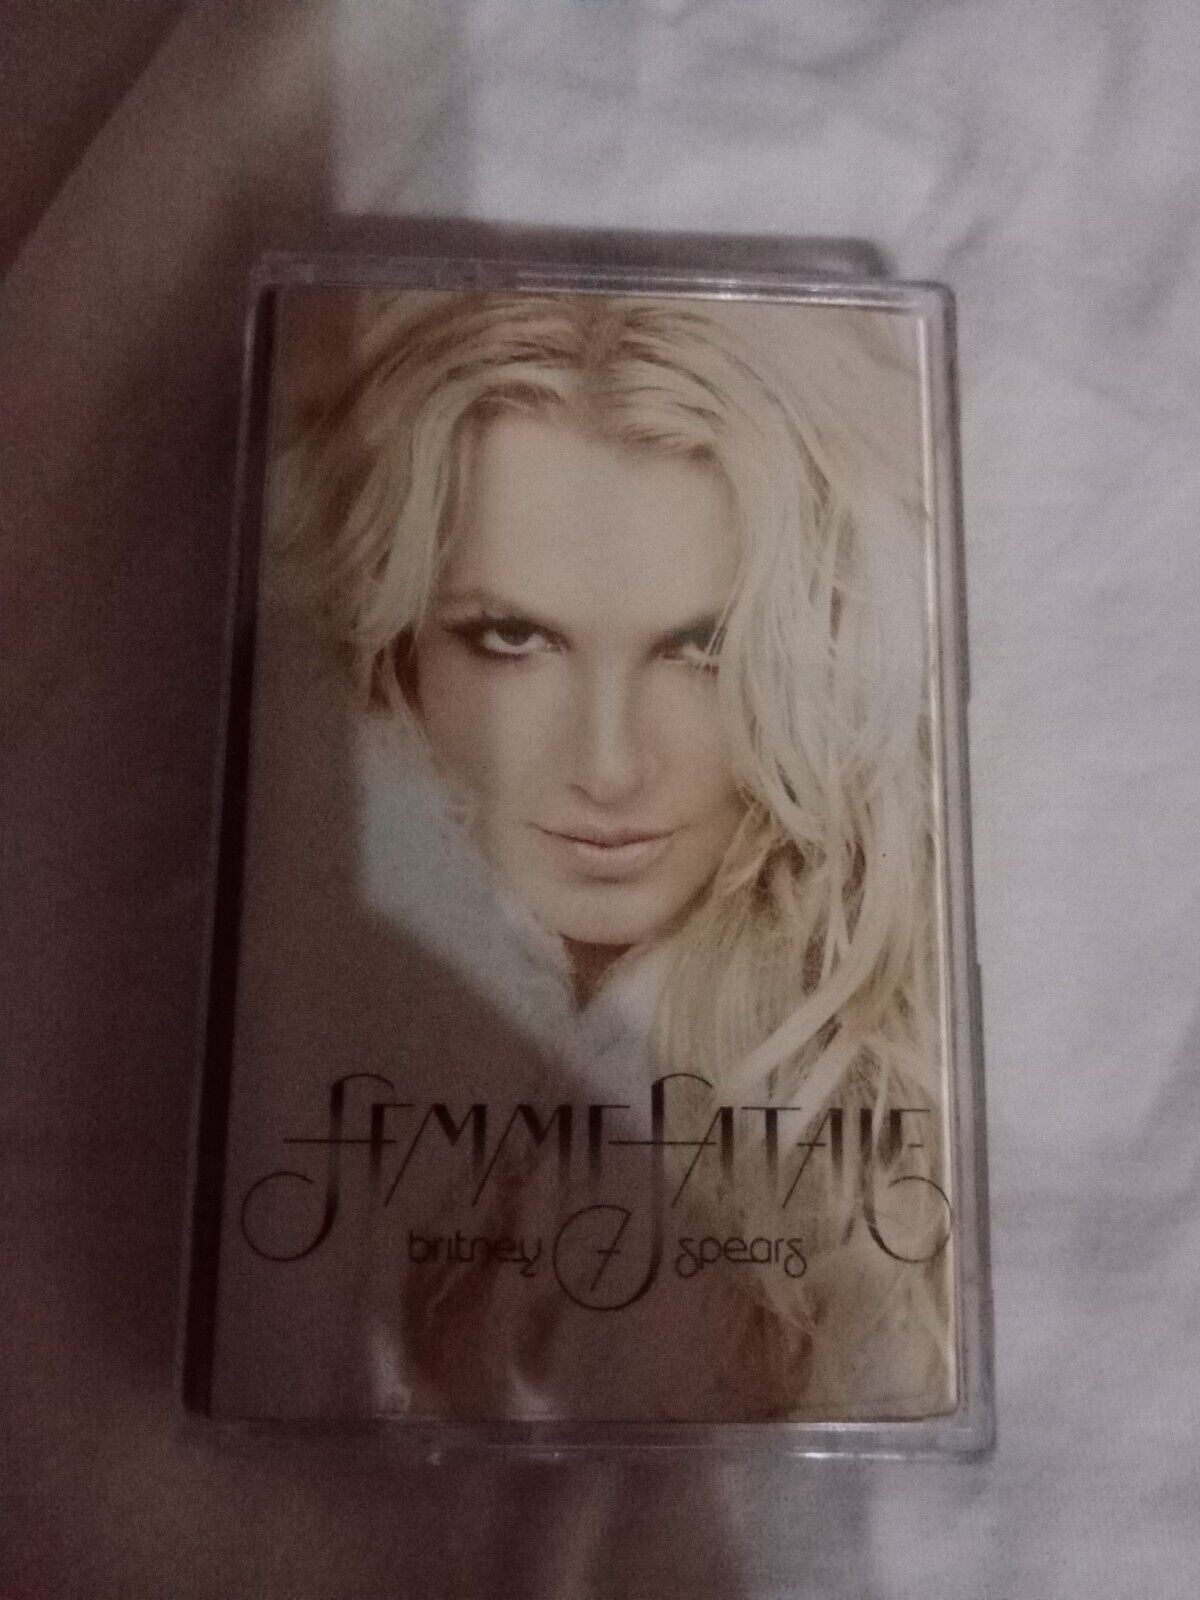 Femme Fatale Casete Gold Edition Like New Britney Spears